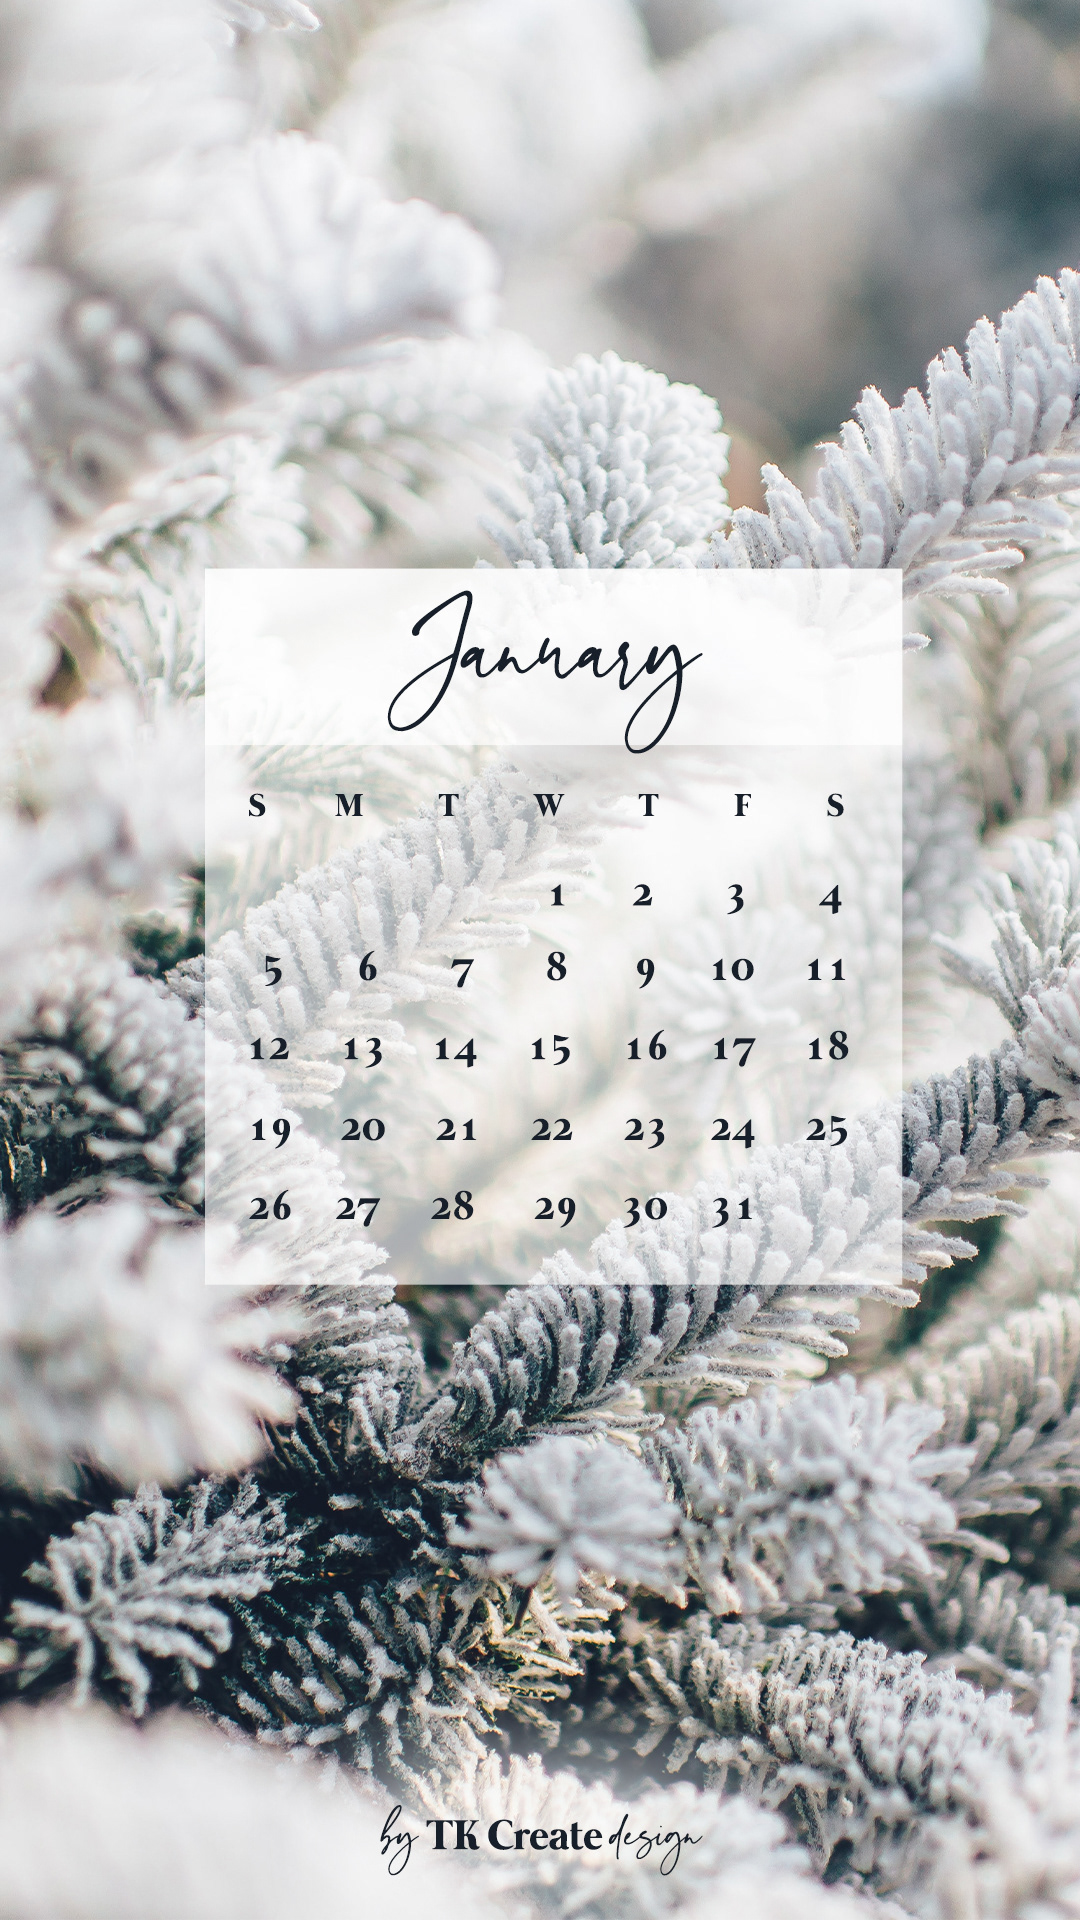 Tatiana K - January 2020 FREE Downloadable Calendar